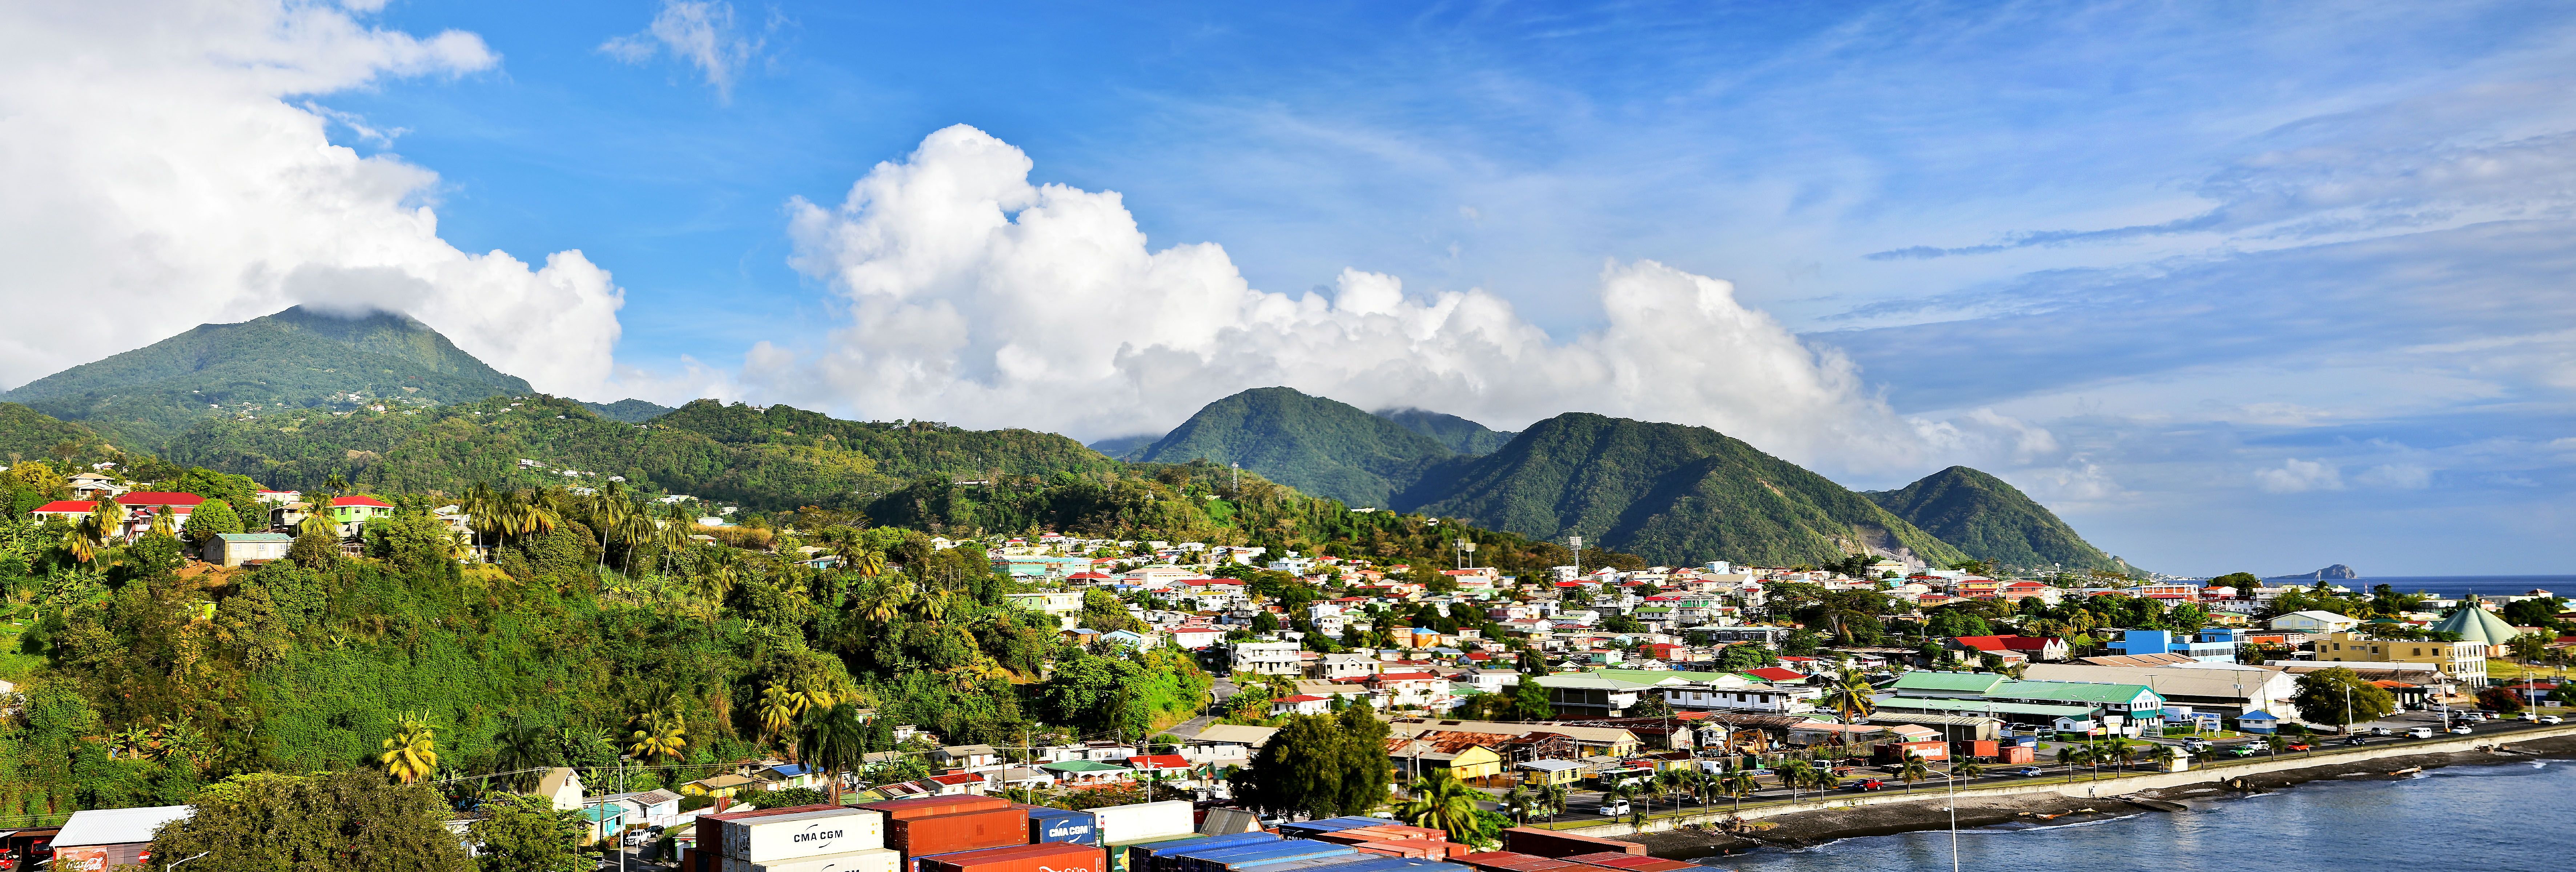 Roseau, Dominica Panorama_02_20x60.jpg